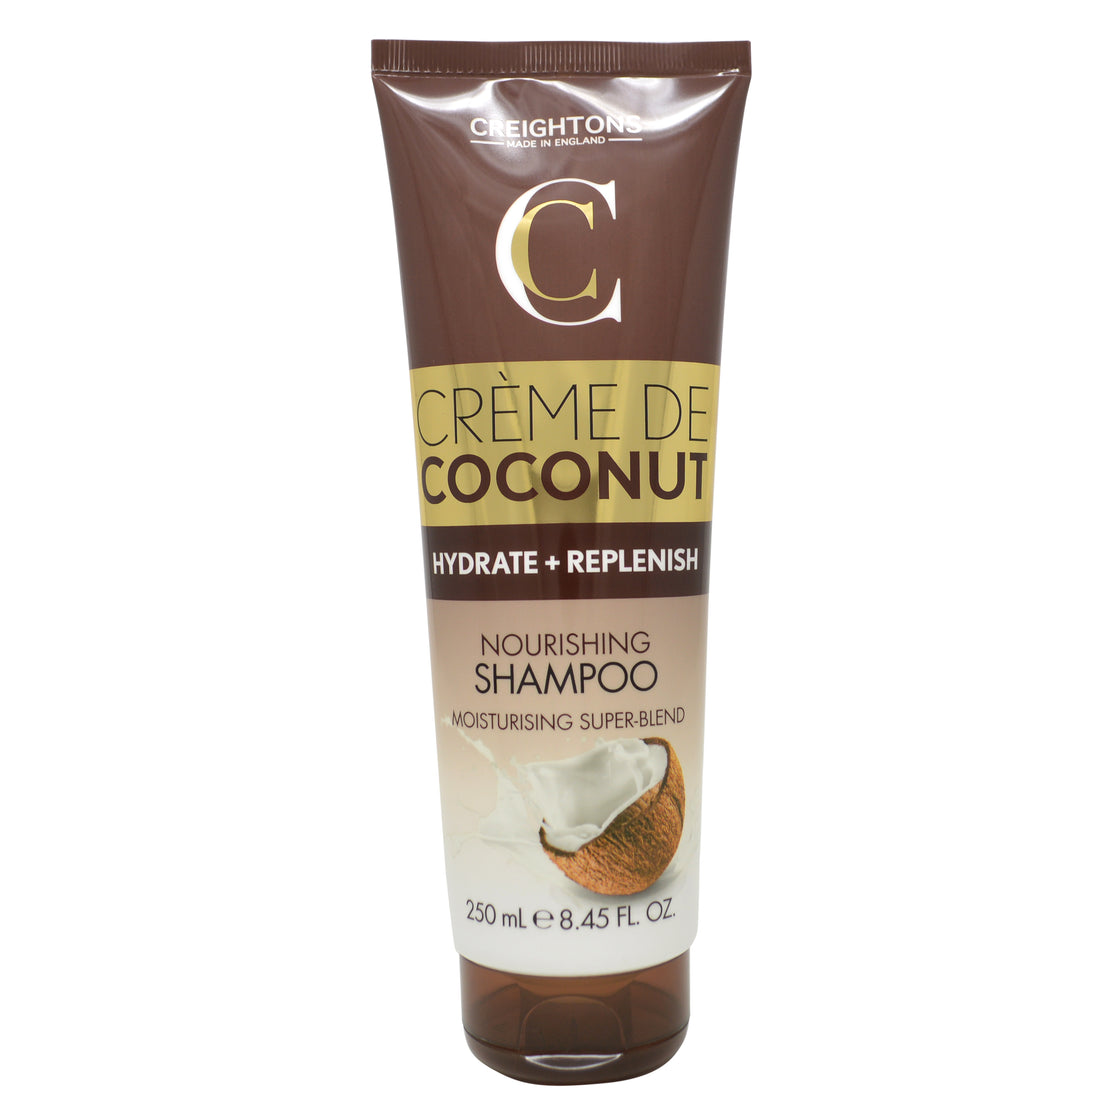 Crème de Coconut & Keratin Shampoo 250ml – Creightons